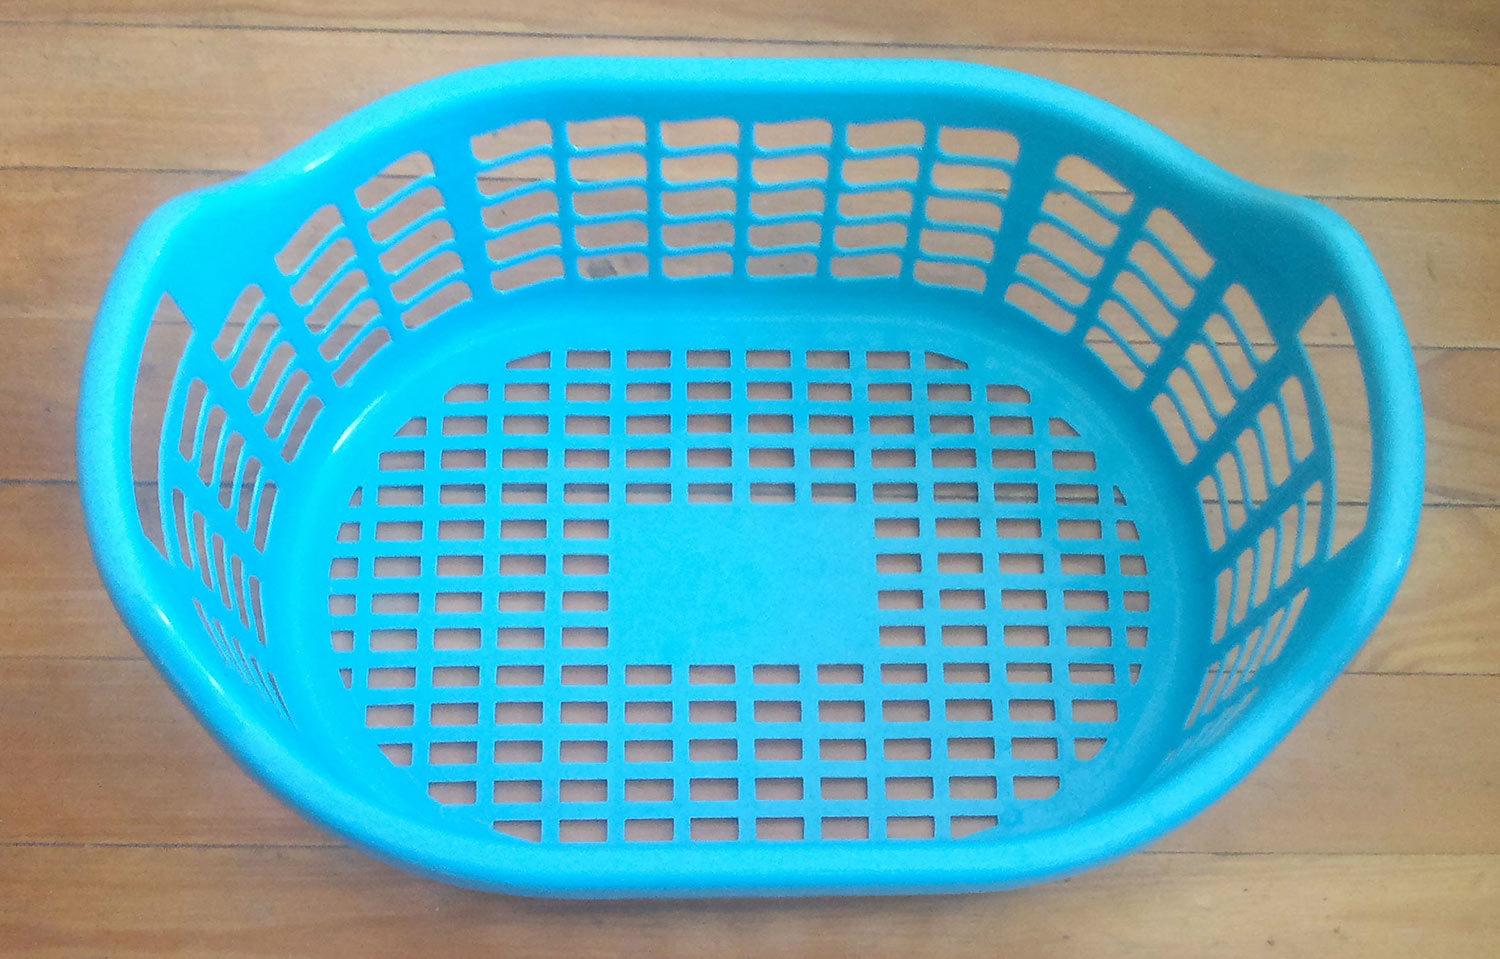 Empty light blue plastic laundry basket sitting on a wood floor.